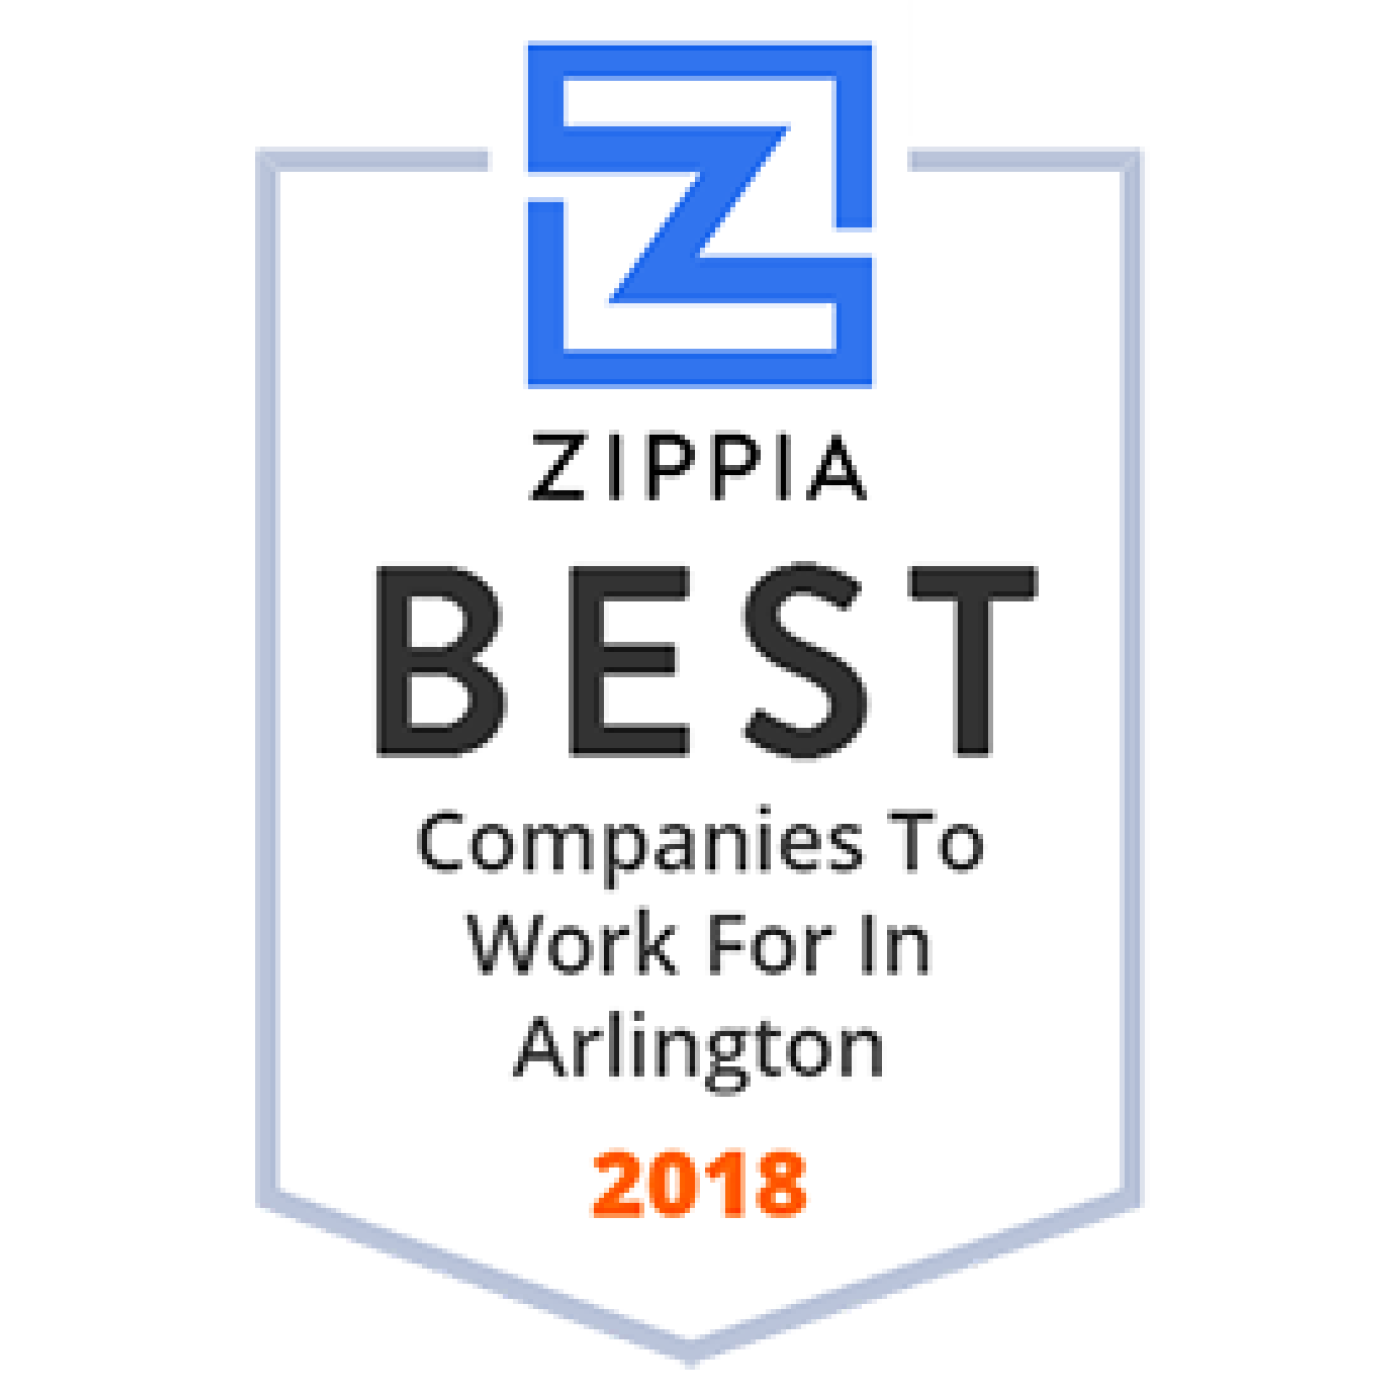 Zippia Best Companies To Work For In Arlington 2018